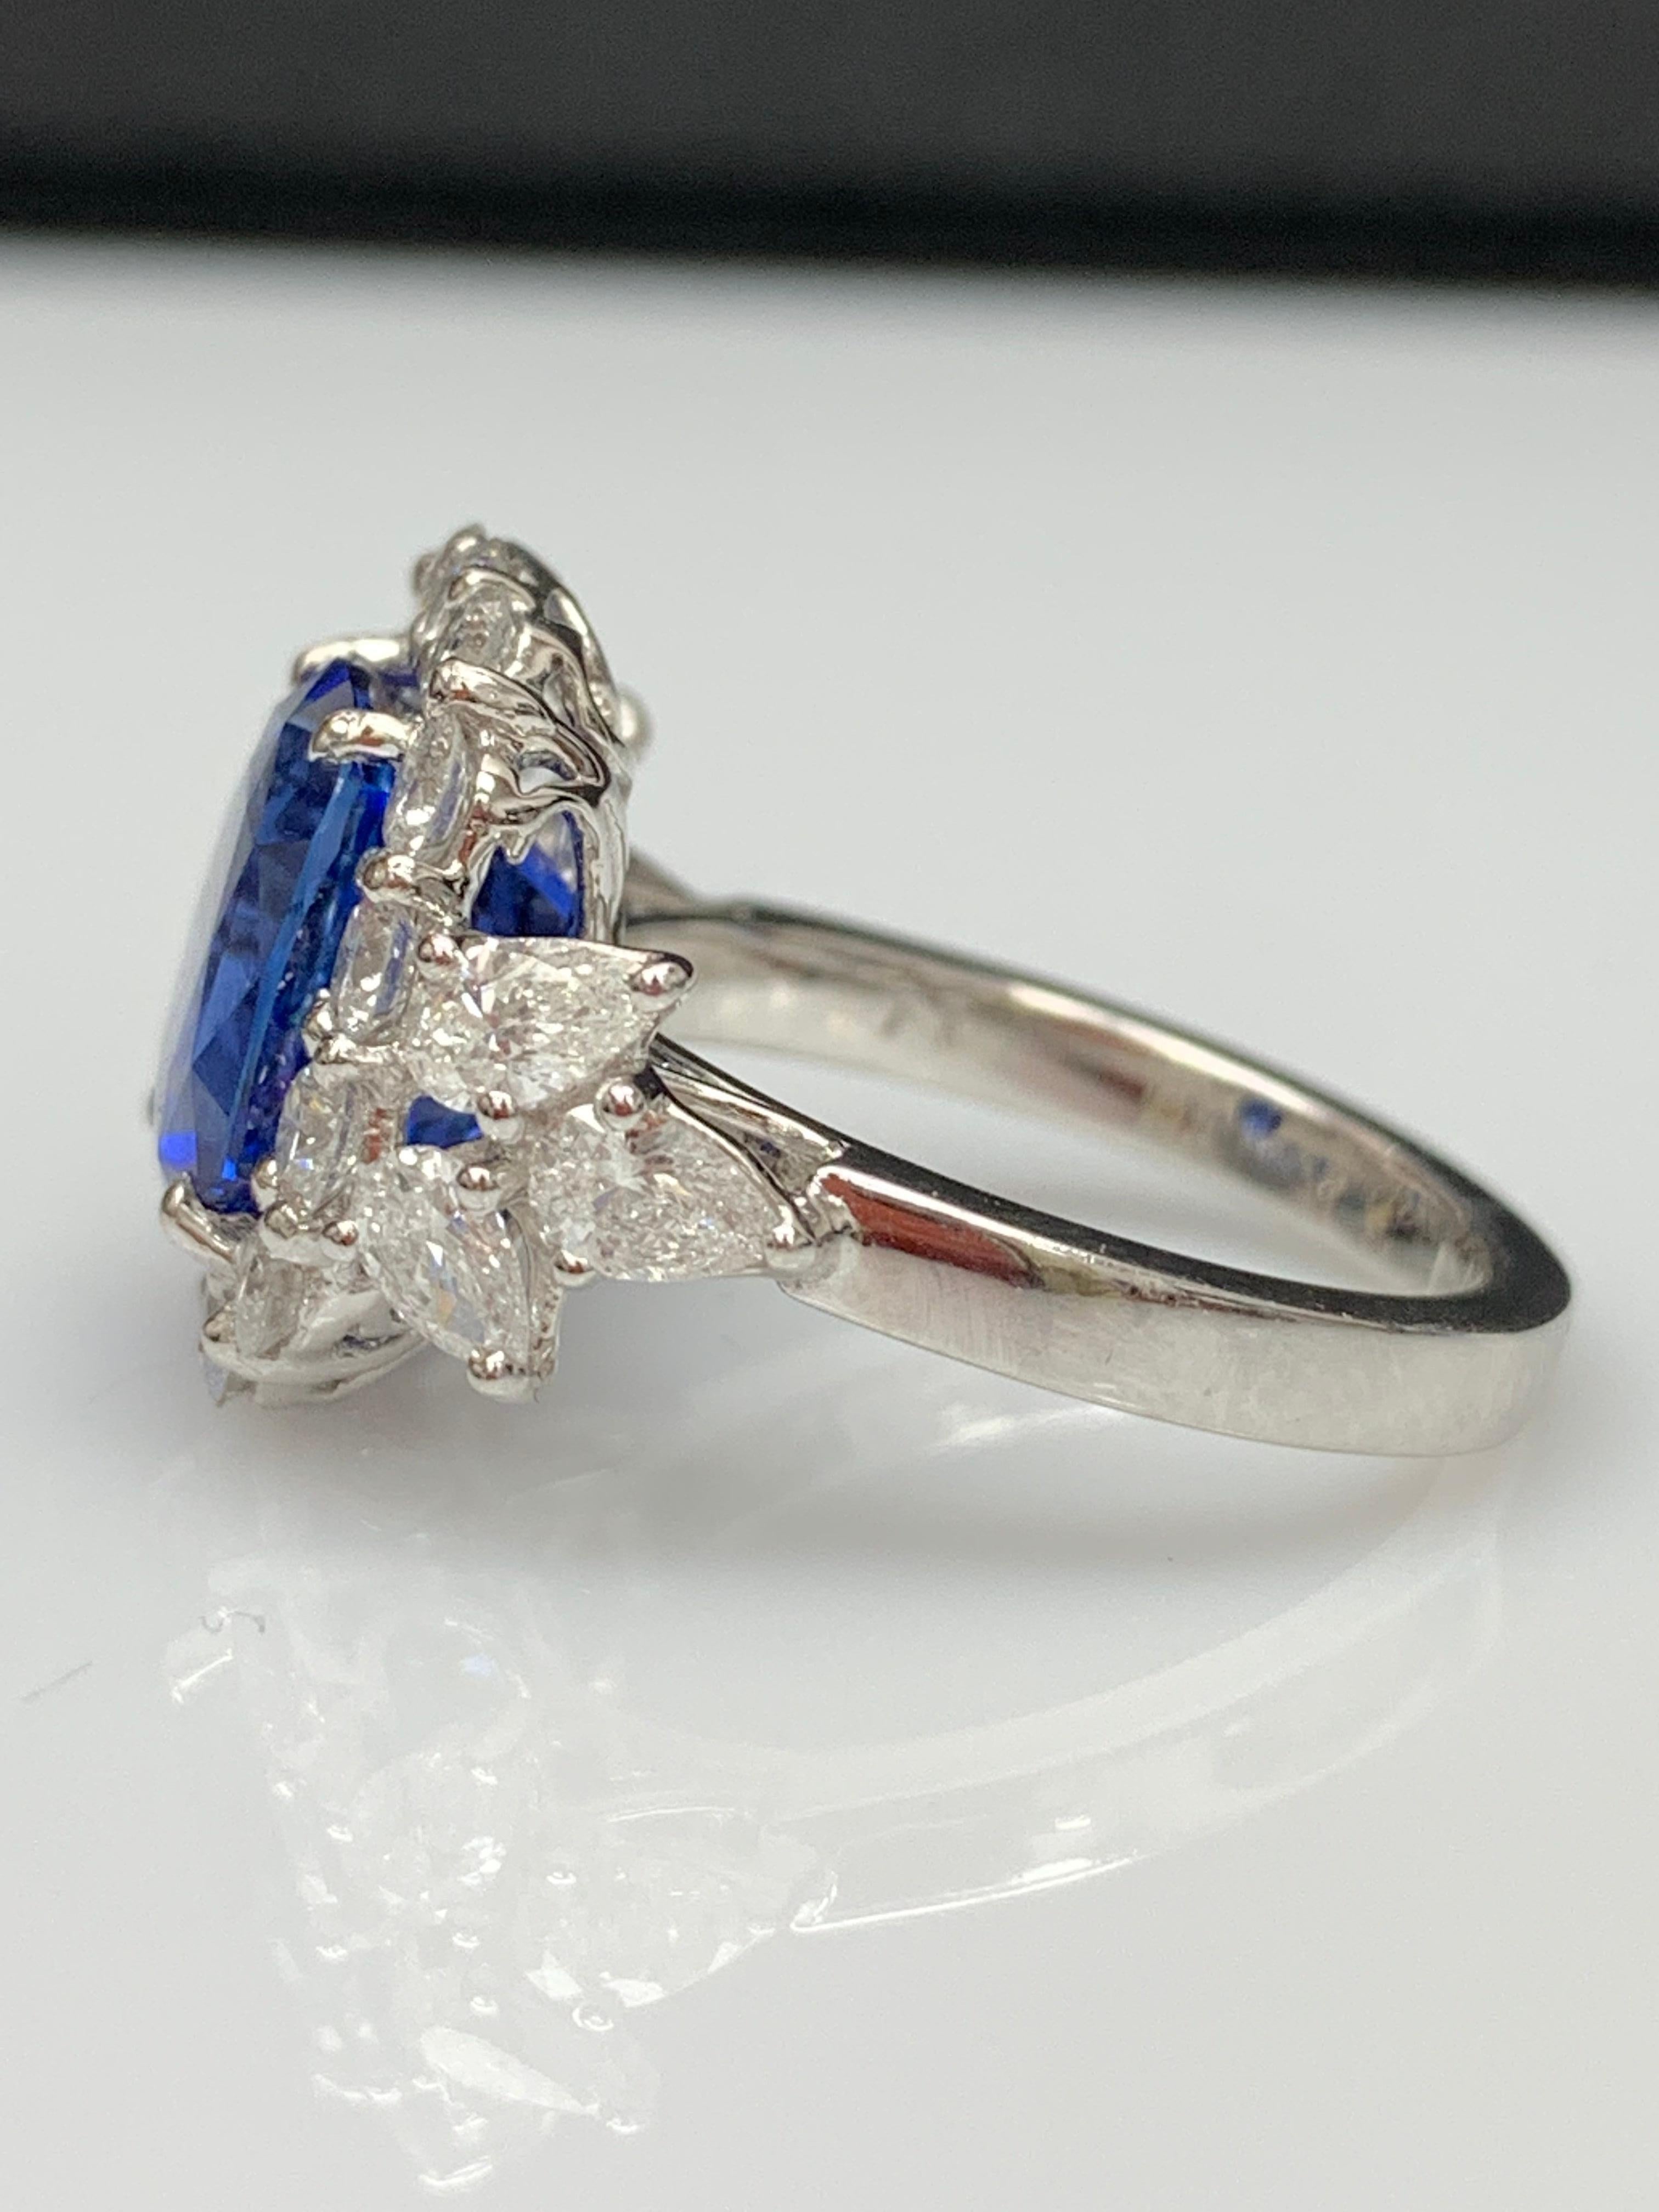 6.61 Carat Cushion Cut Blue Sapphire Diamond Engagement Ring in Platinum For Sale 9